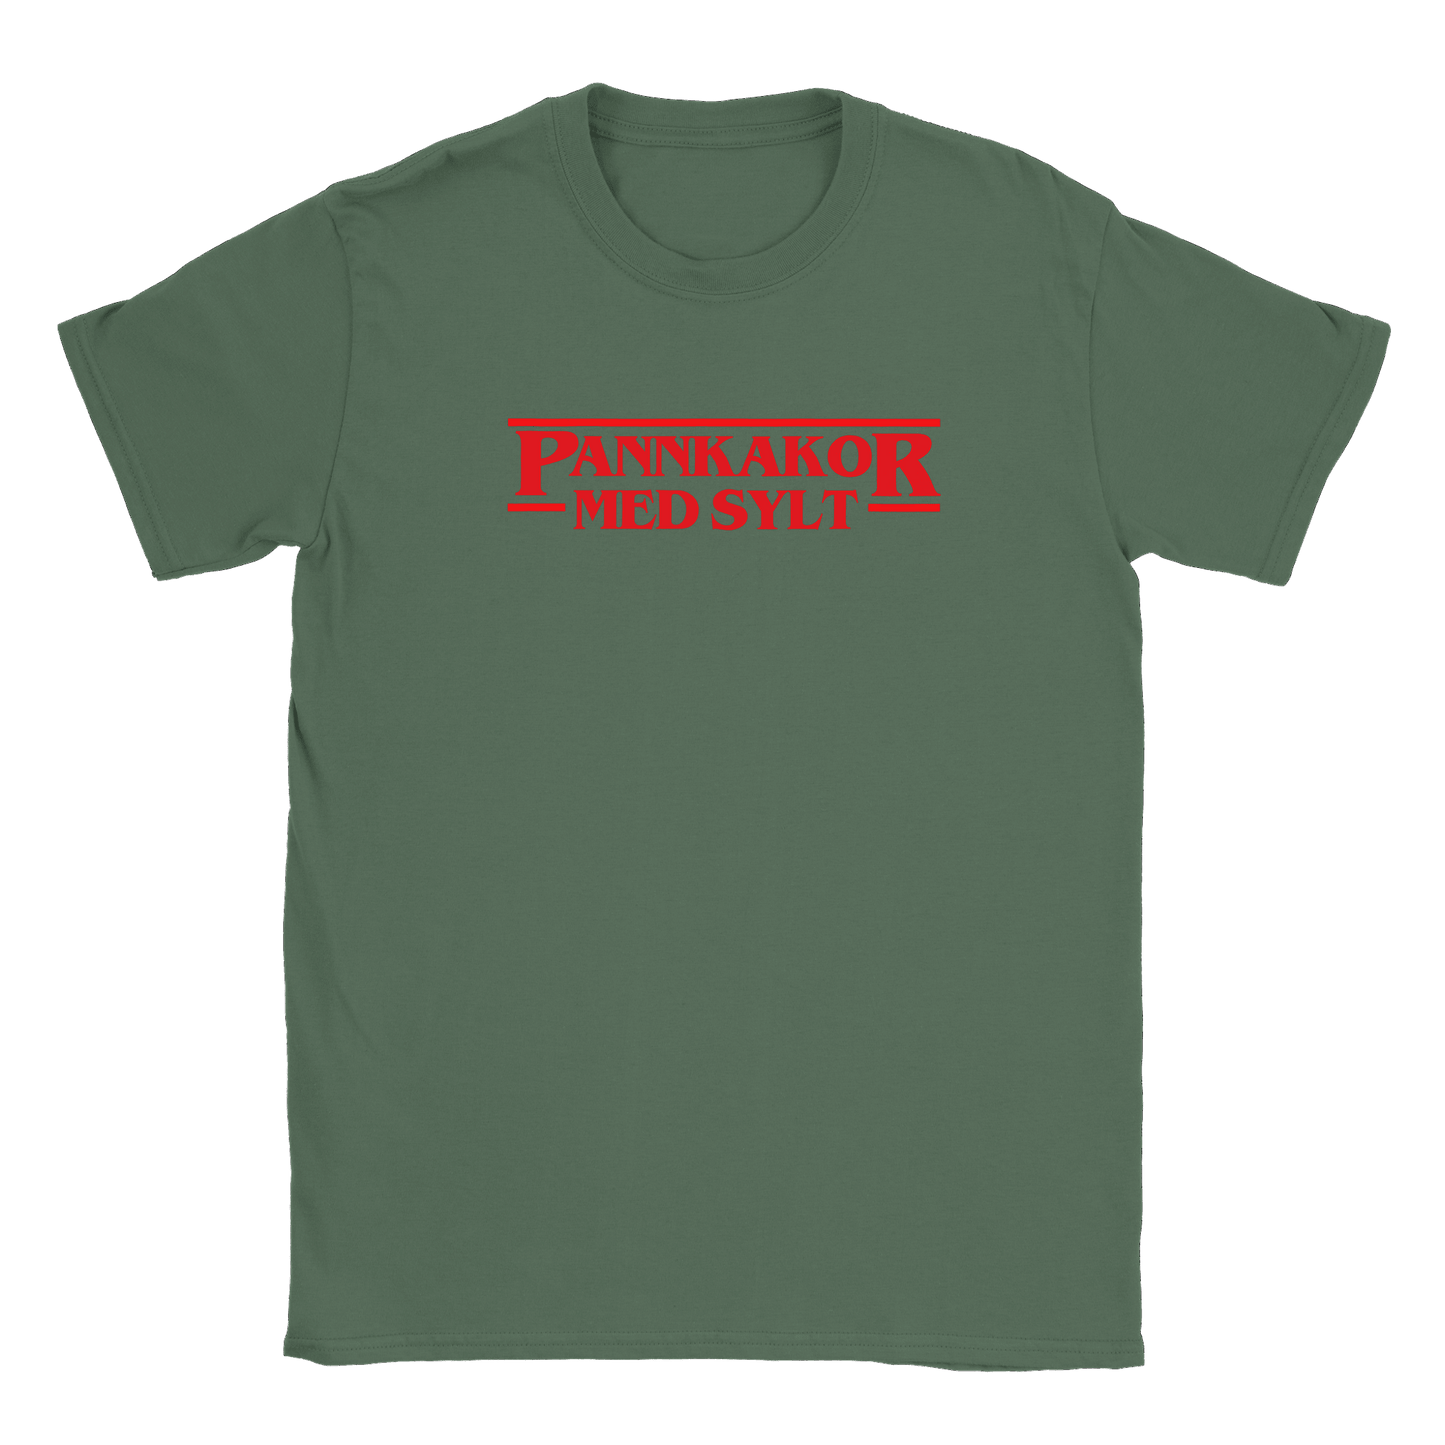 Pannkakor med sylt - T-shirt Military Green